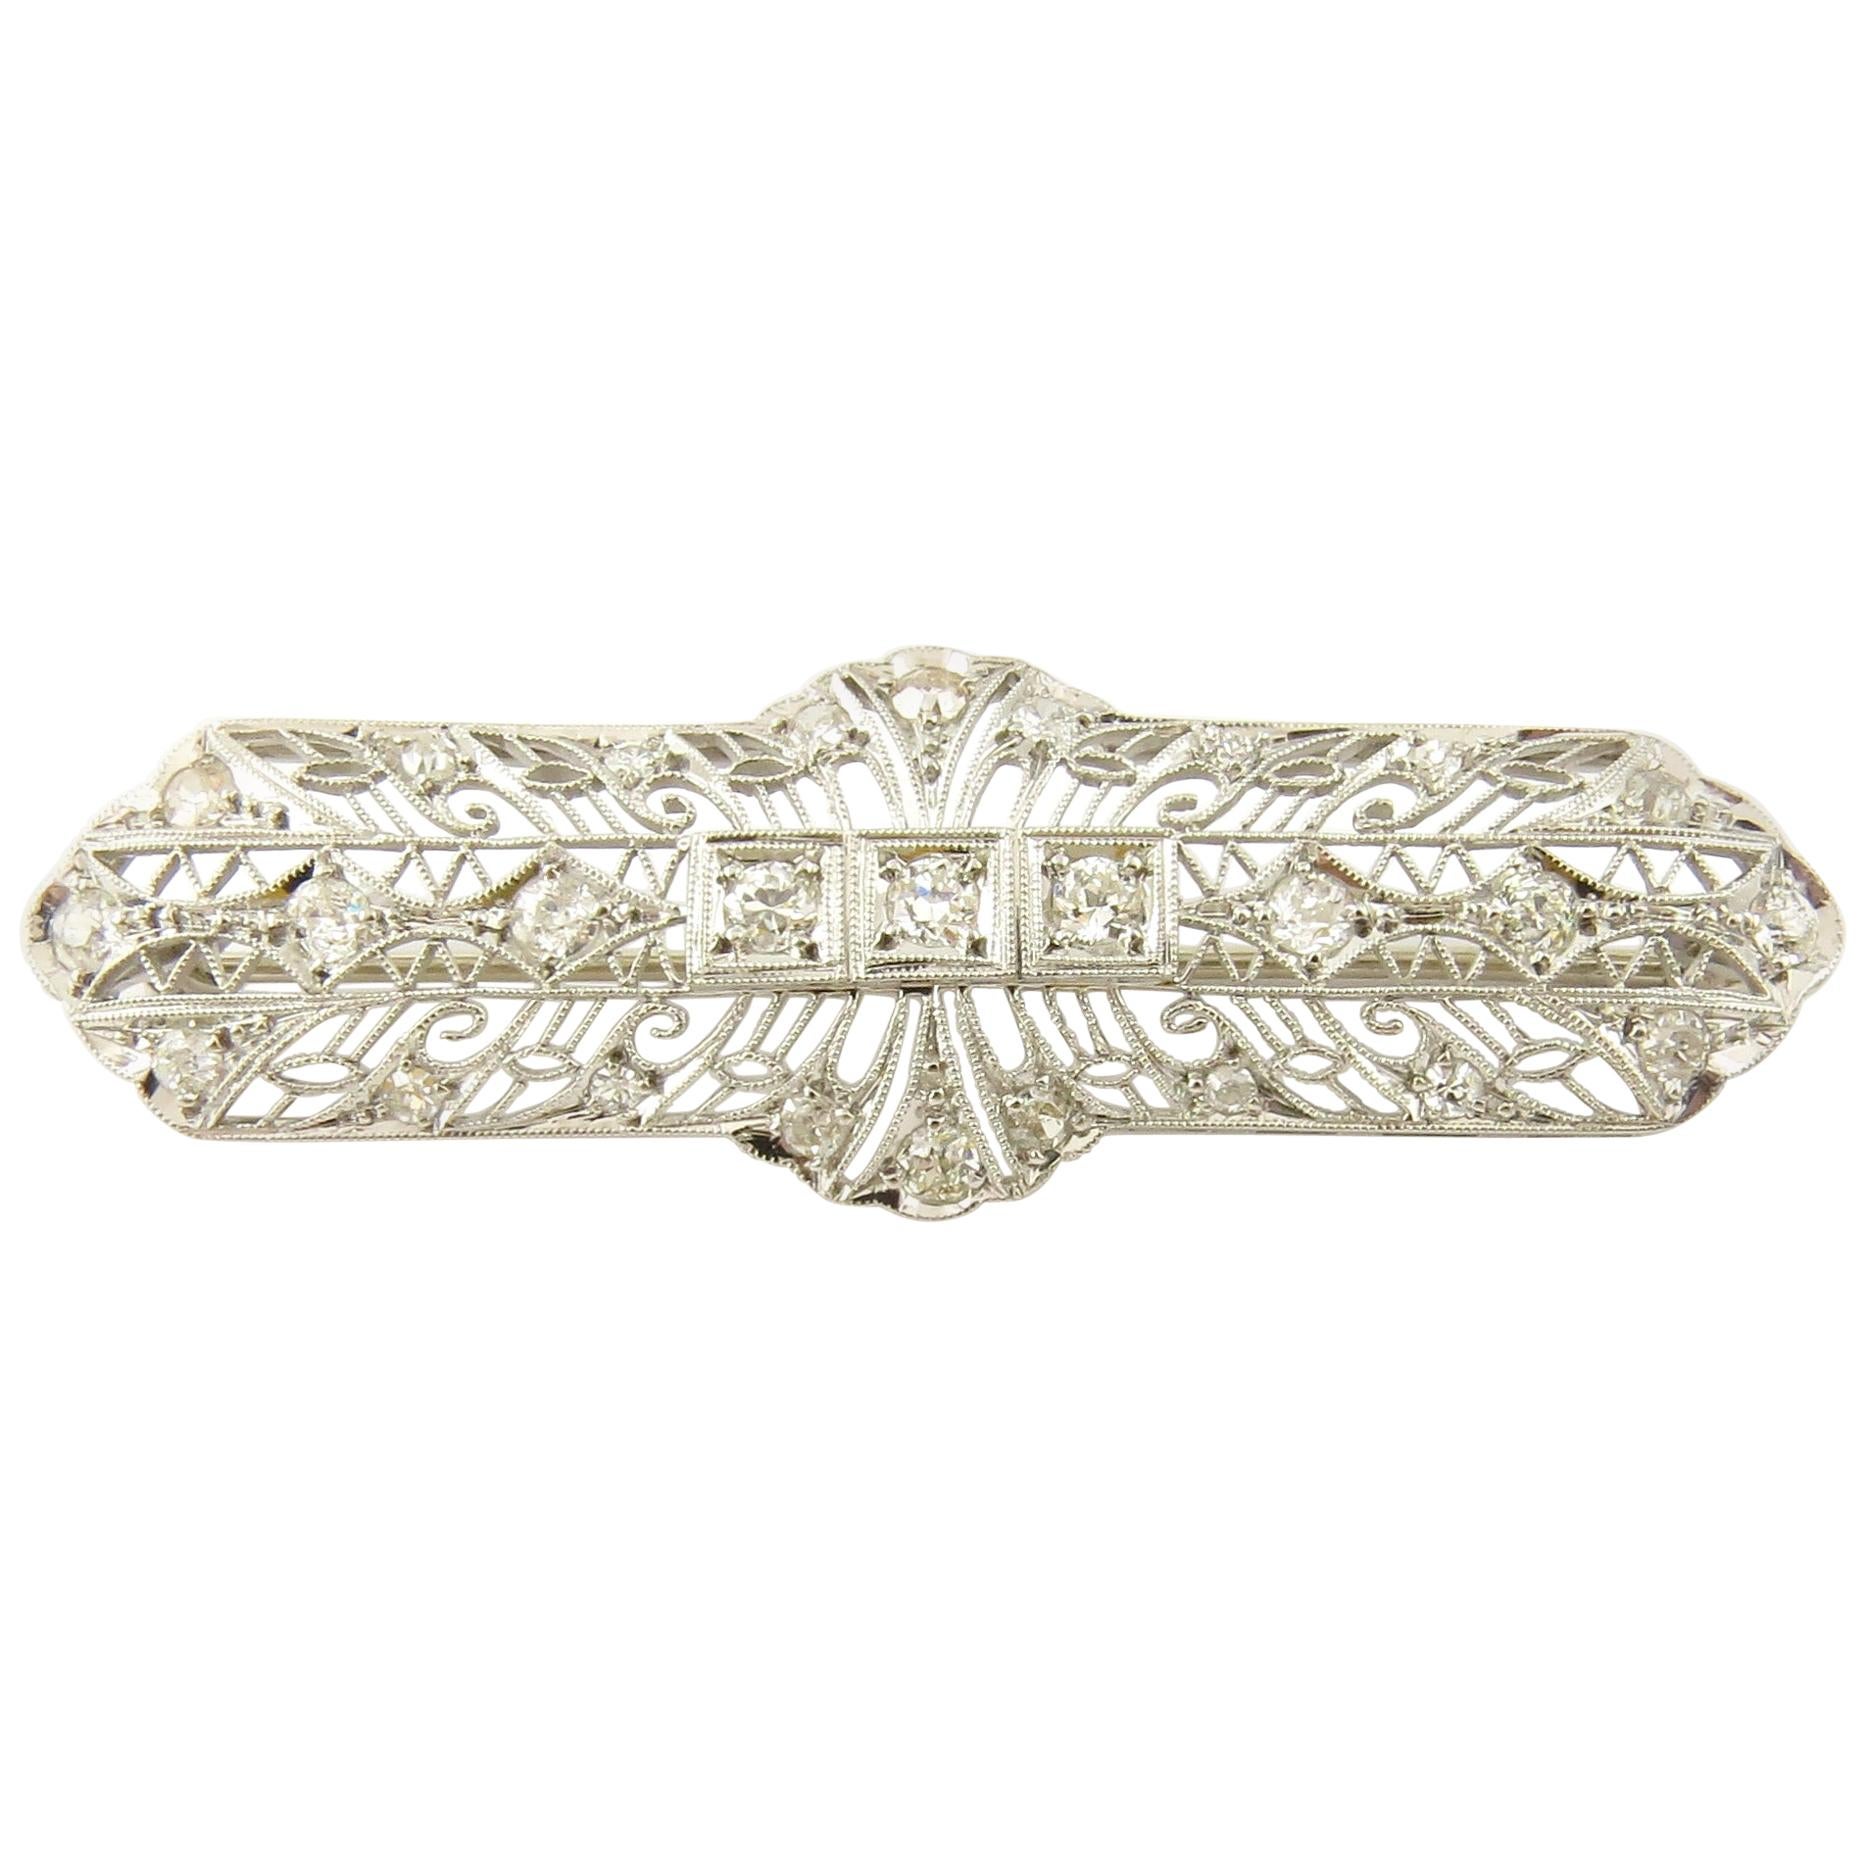 Platinum and Diamond Bar Pin or Brooch